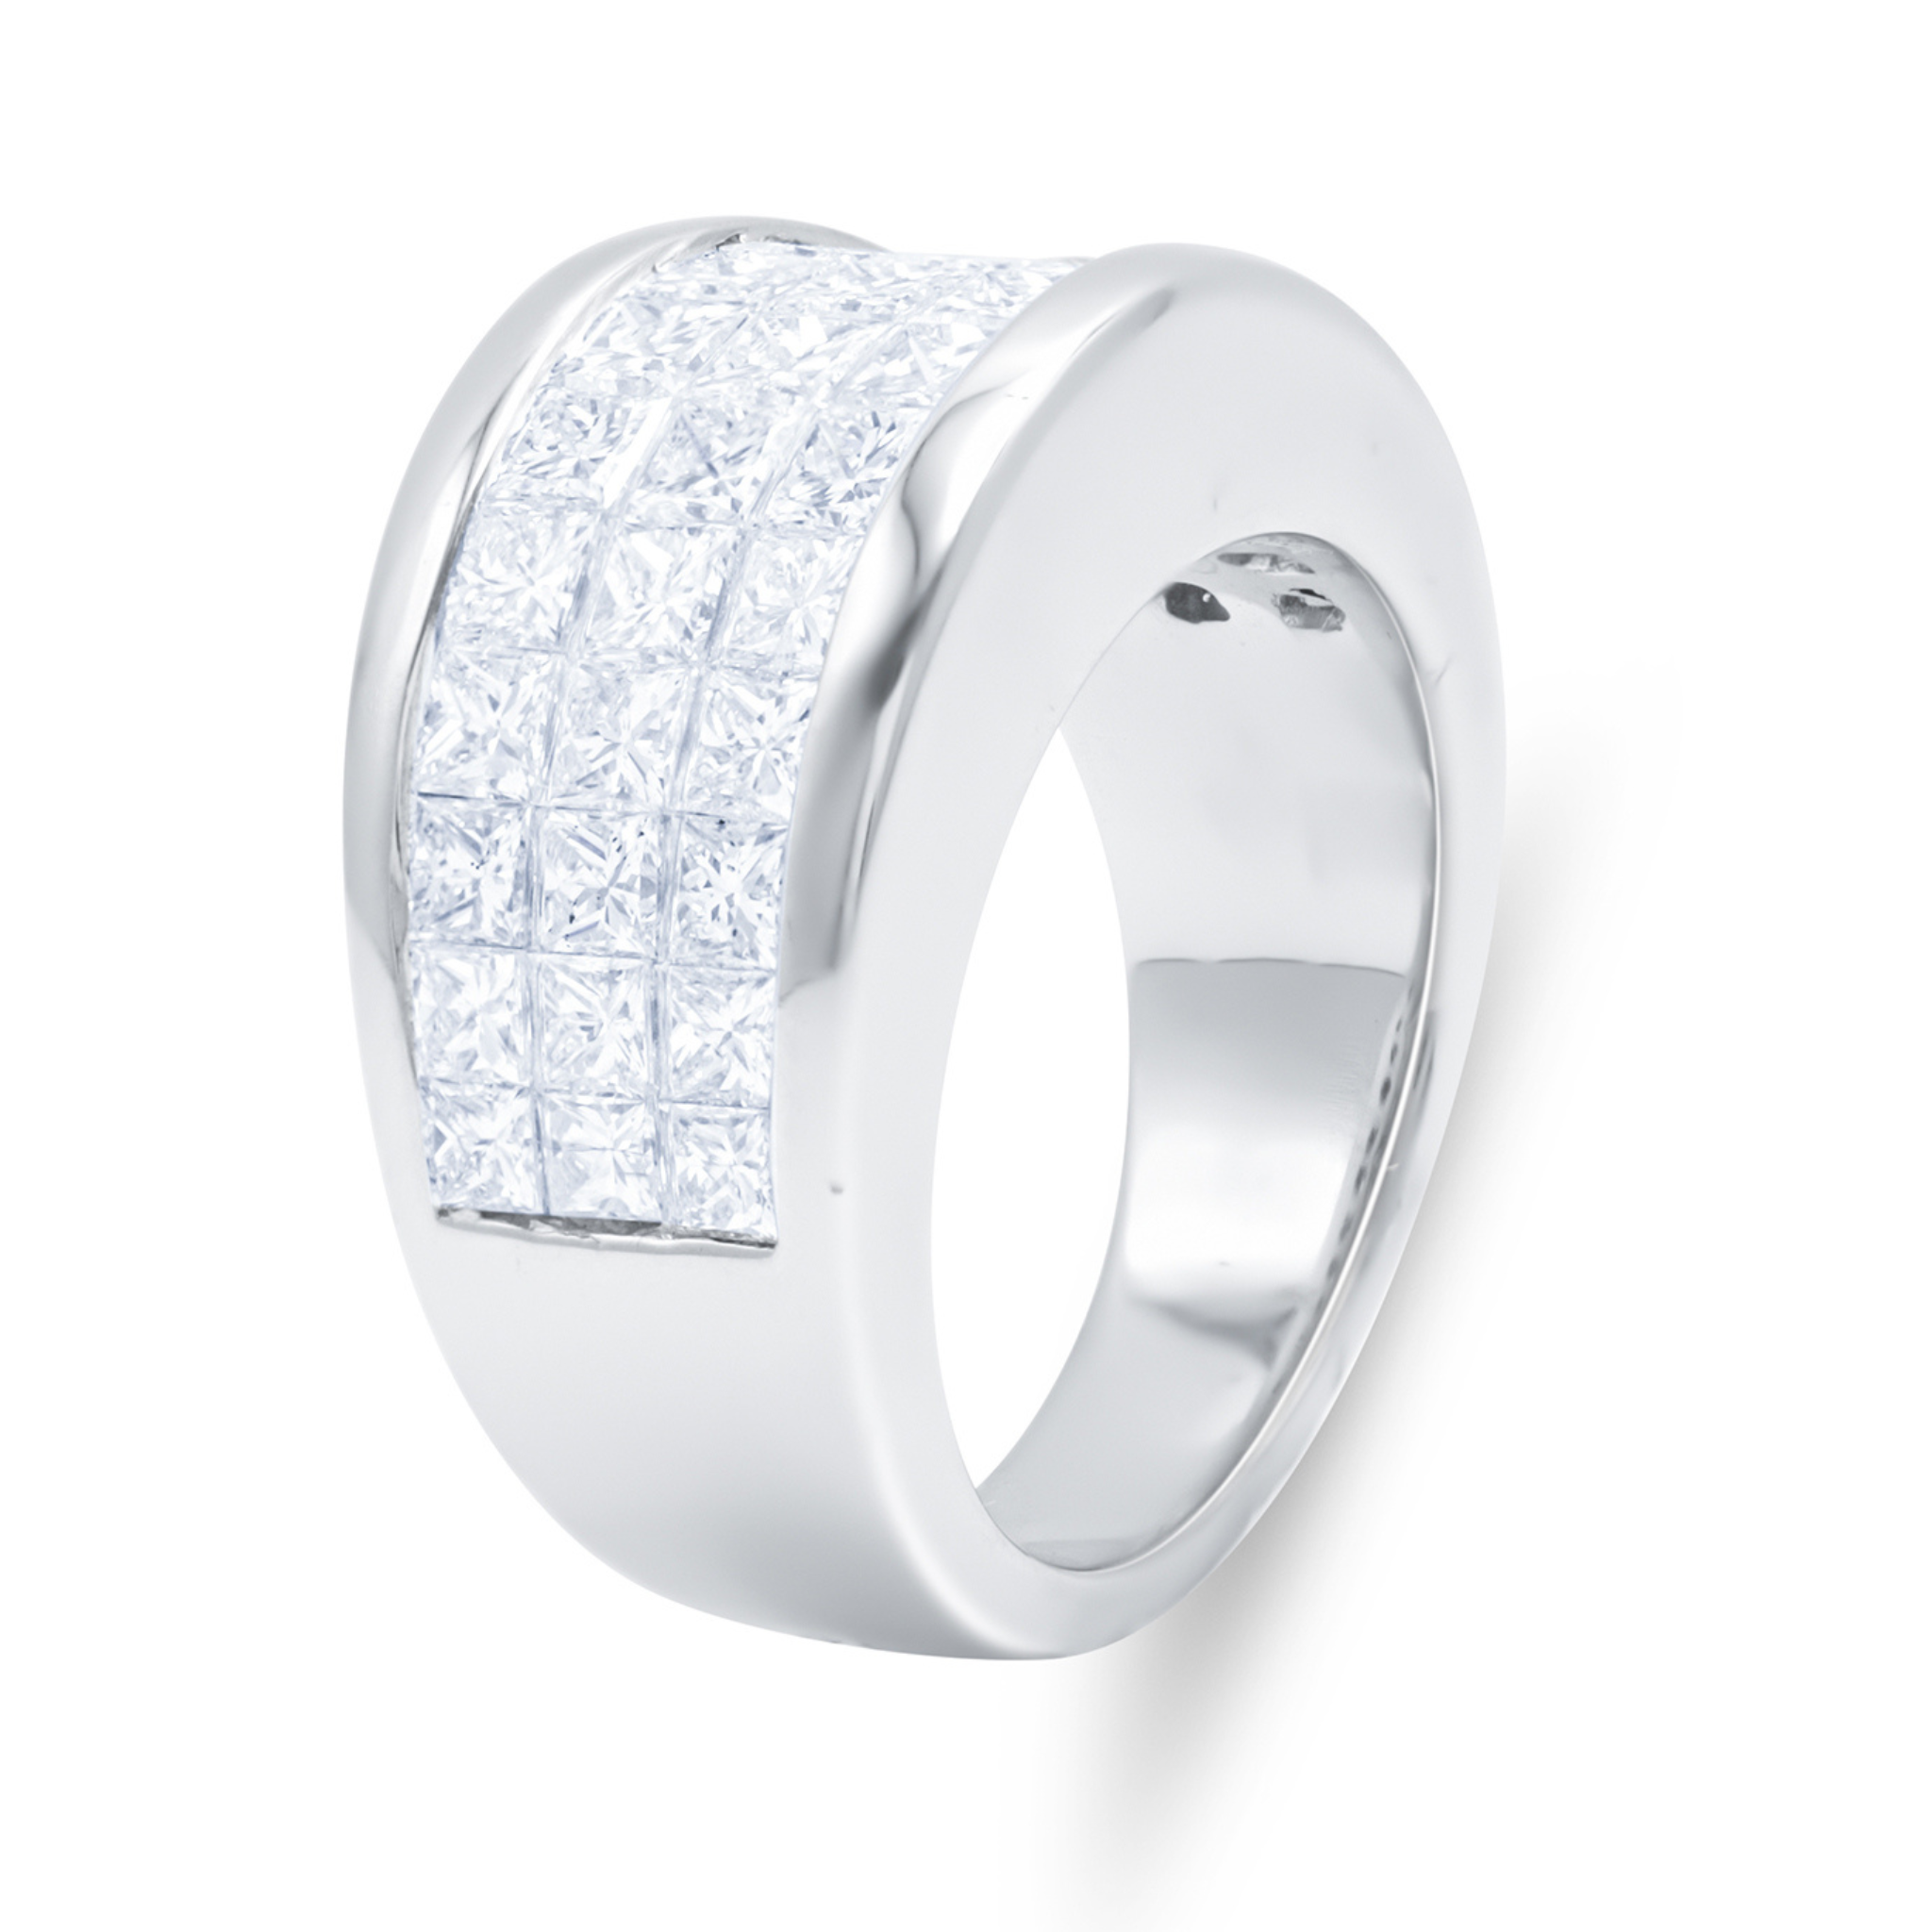 3.50ct Diamond Princess Cut Ring.jpg